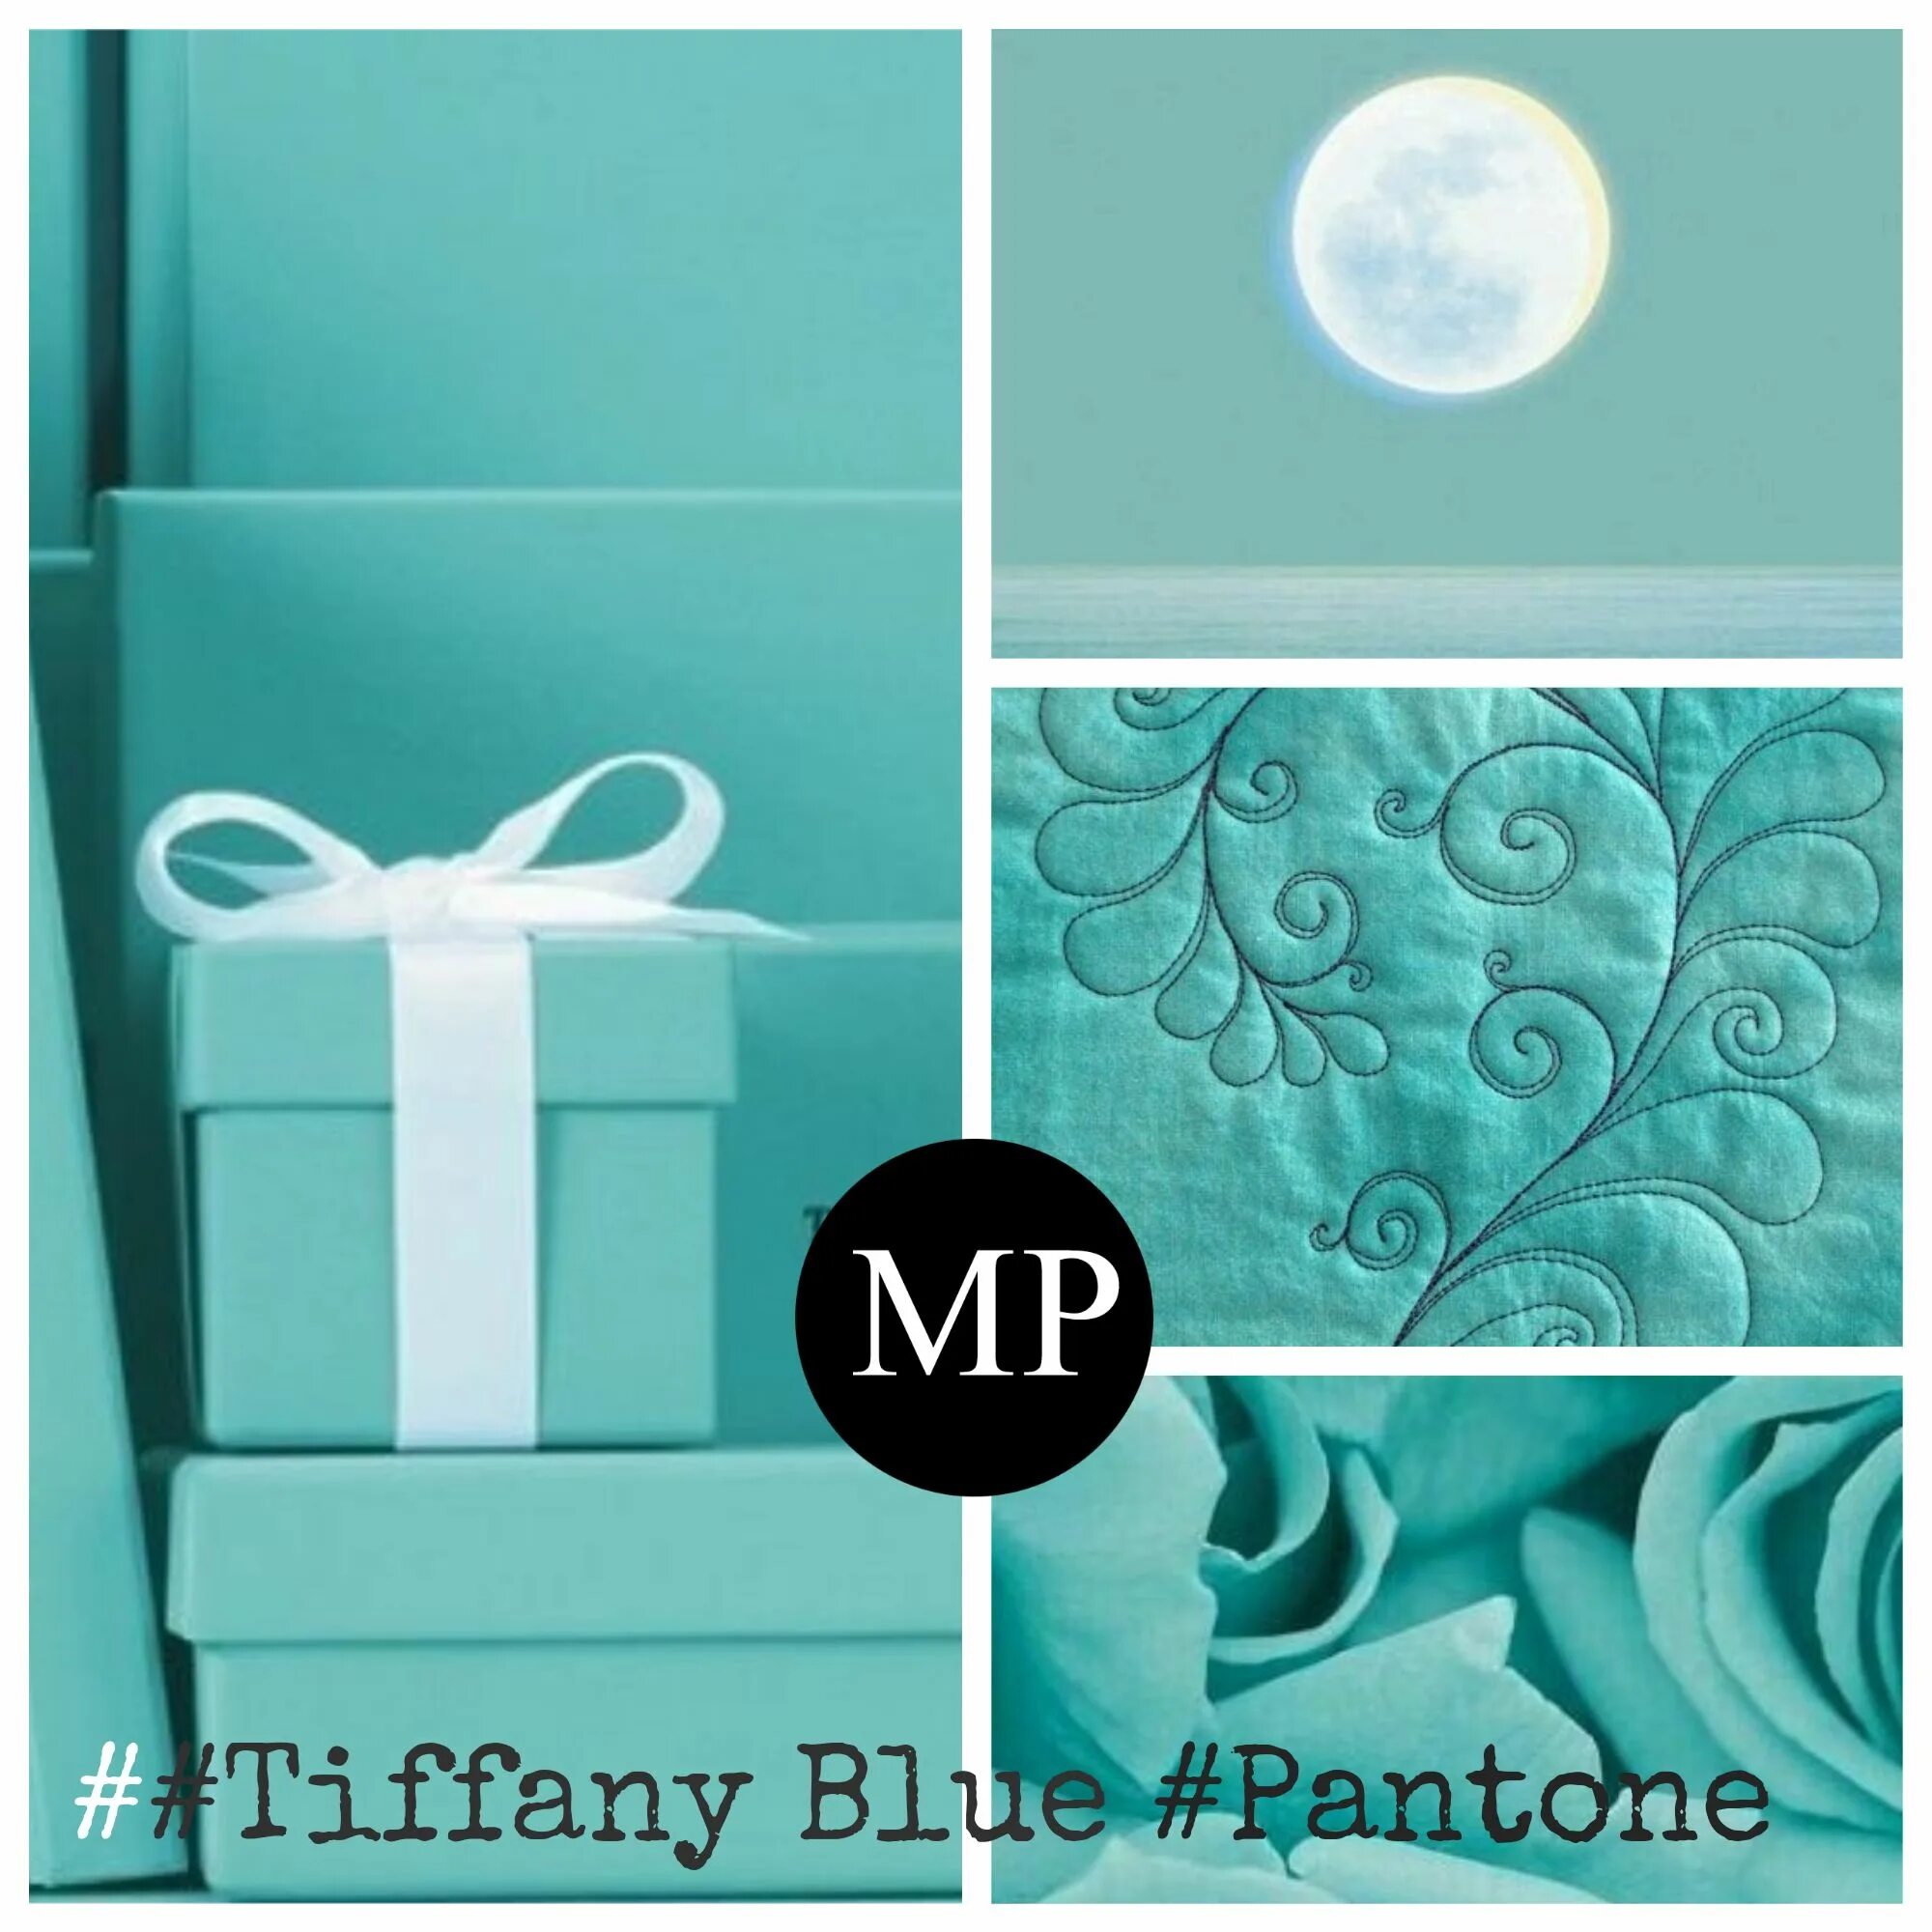 Пантон Тиффани 1837. Пантон Тиффани Блю. Цвет Тиффани пантон 1837. Pantone 1837 Tiffany Blue.